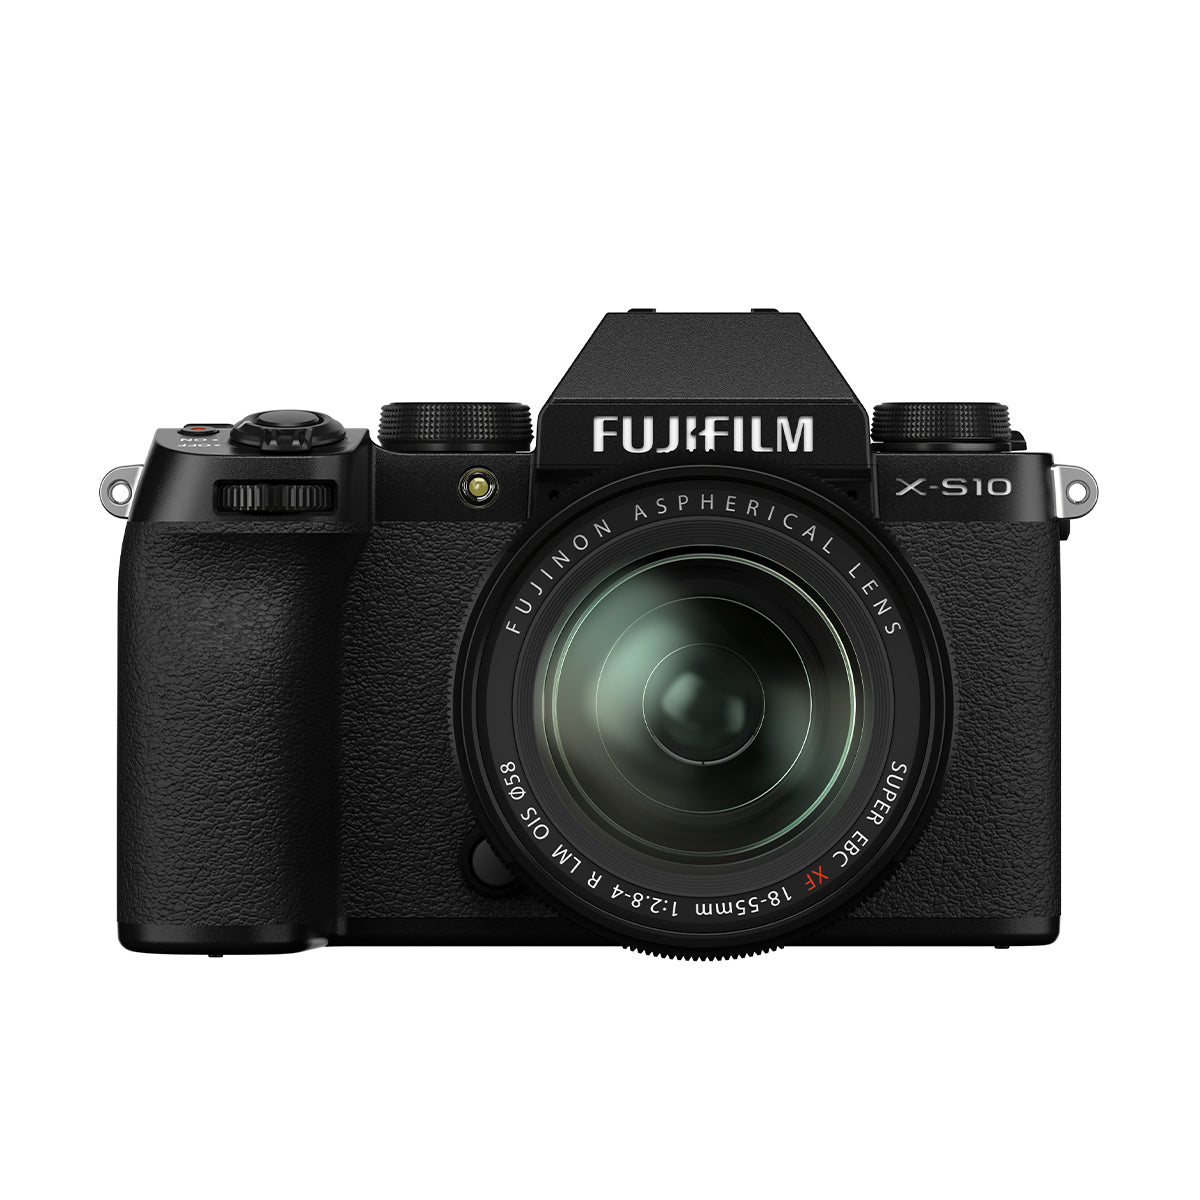 Fujifilm X-S10 Mirrorless Body with XF 18-55mm Lens Kit